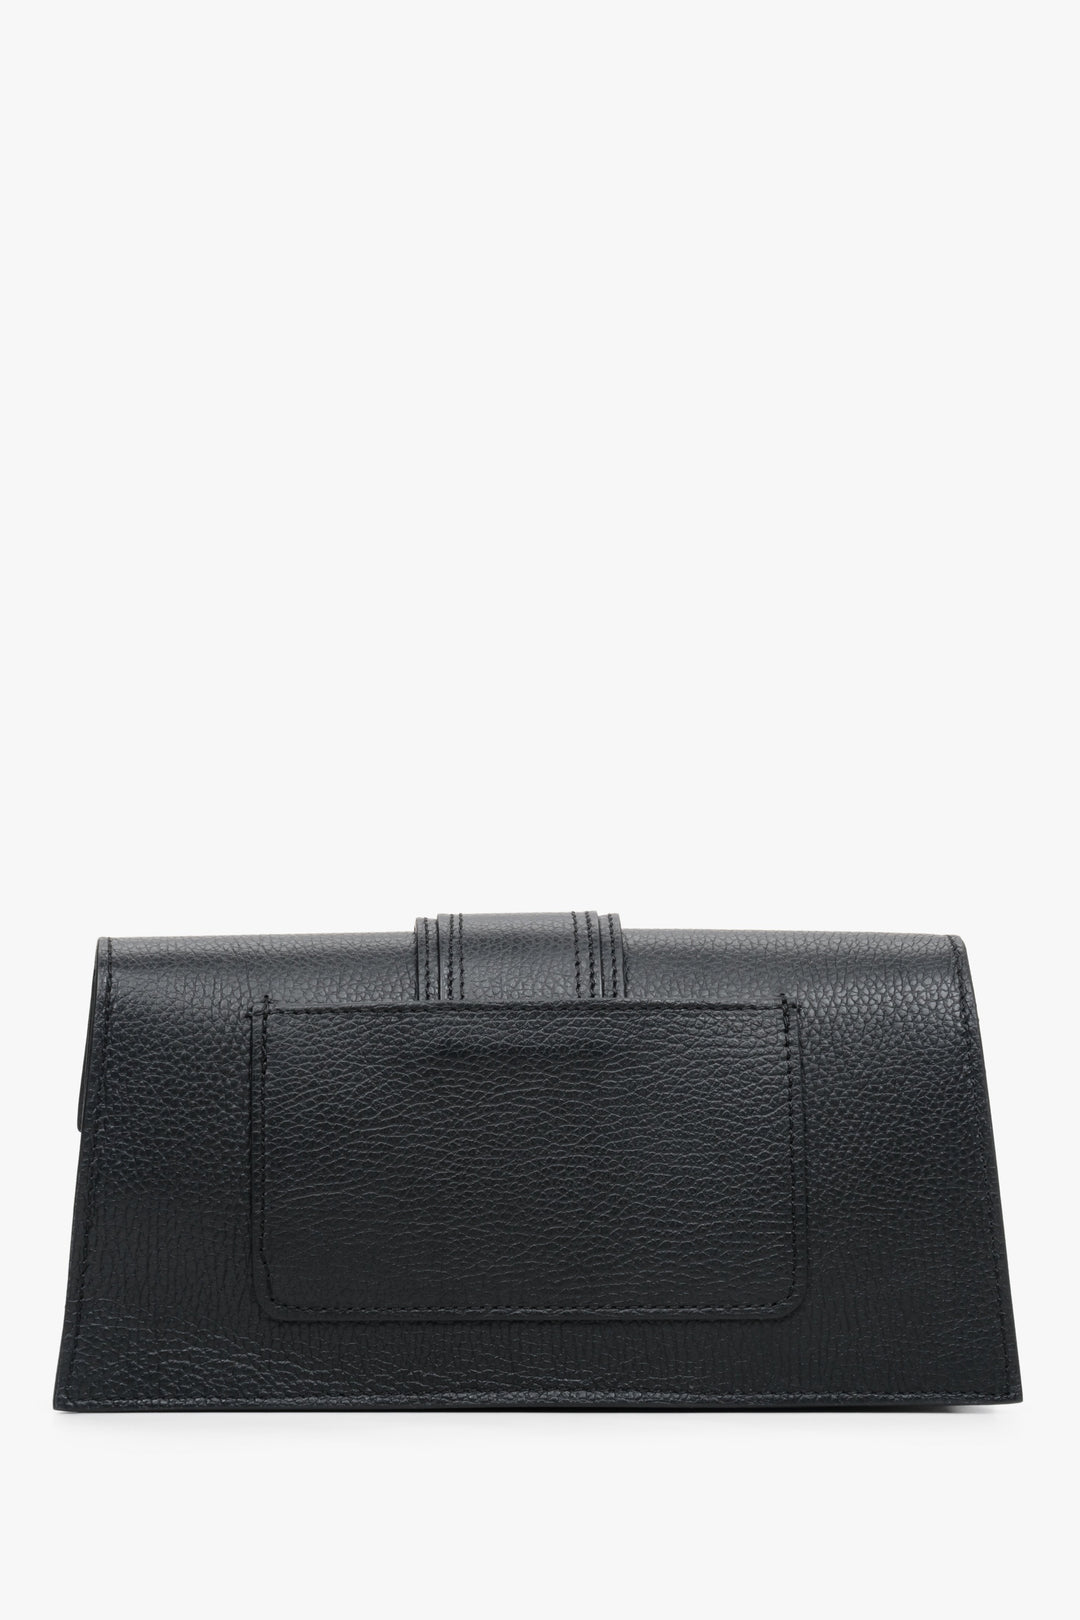 Small Estro women's handbag in black - close-up of the back of the model.